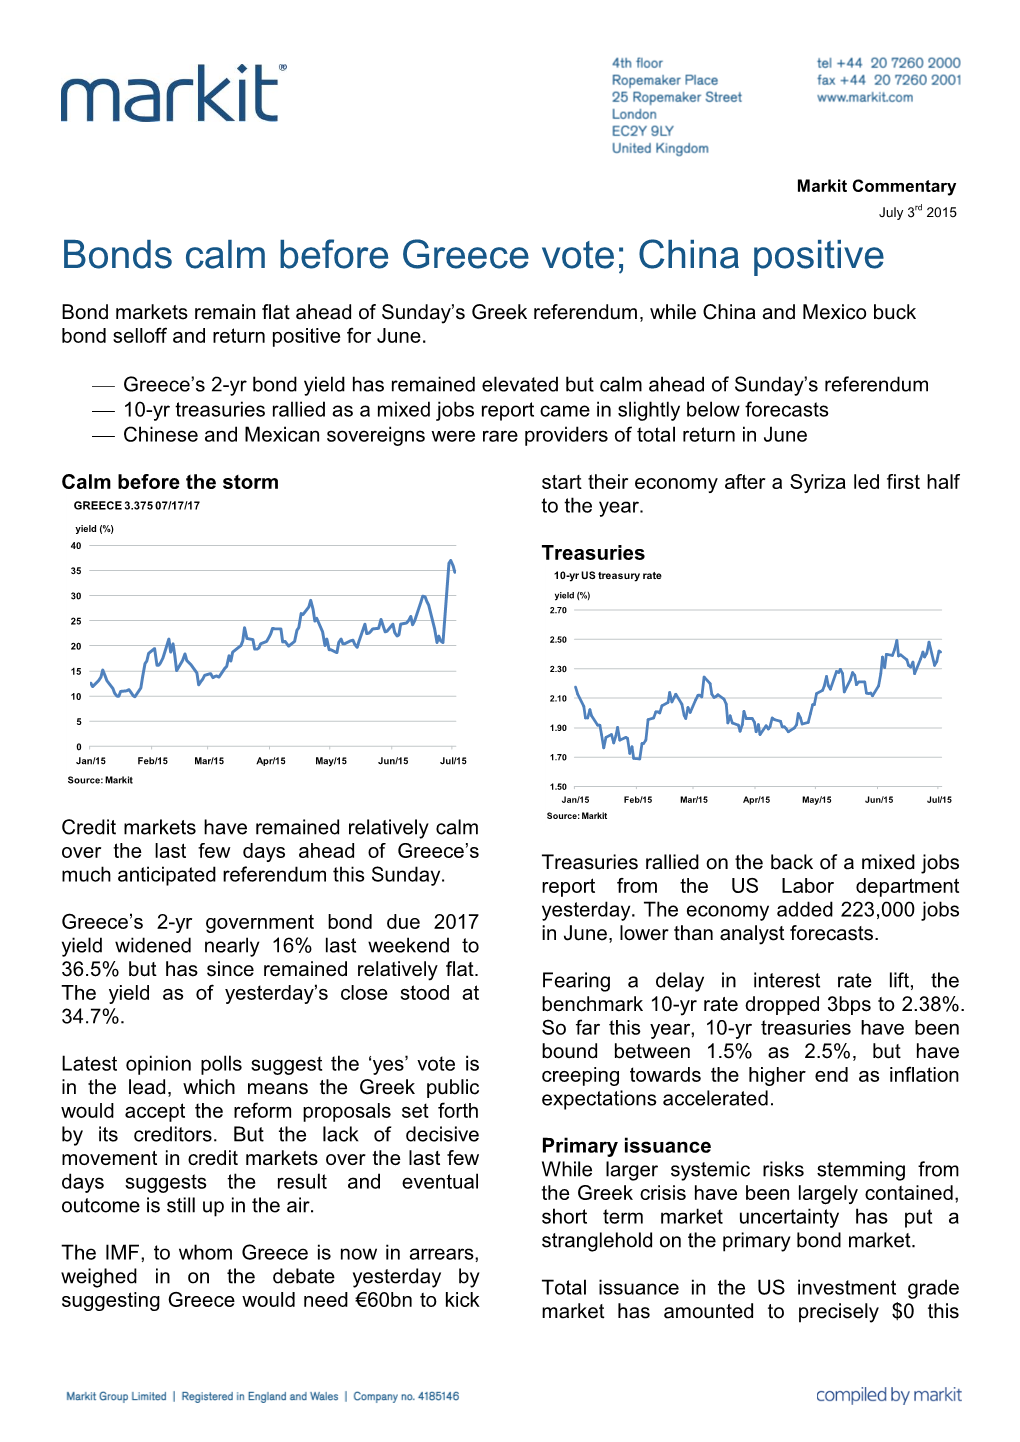 Bonds Calm Before Greece Vote; China Positive